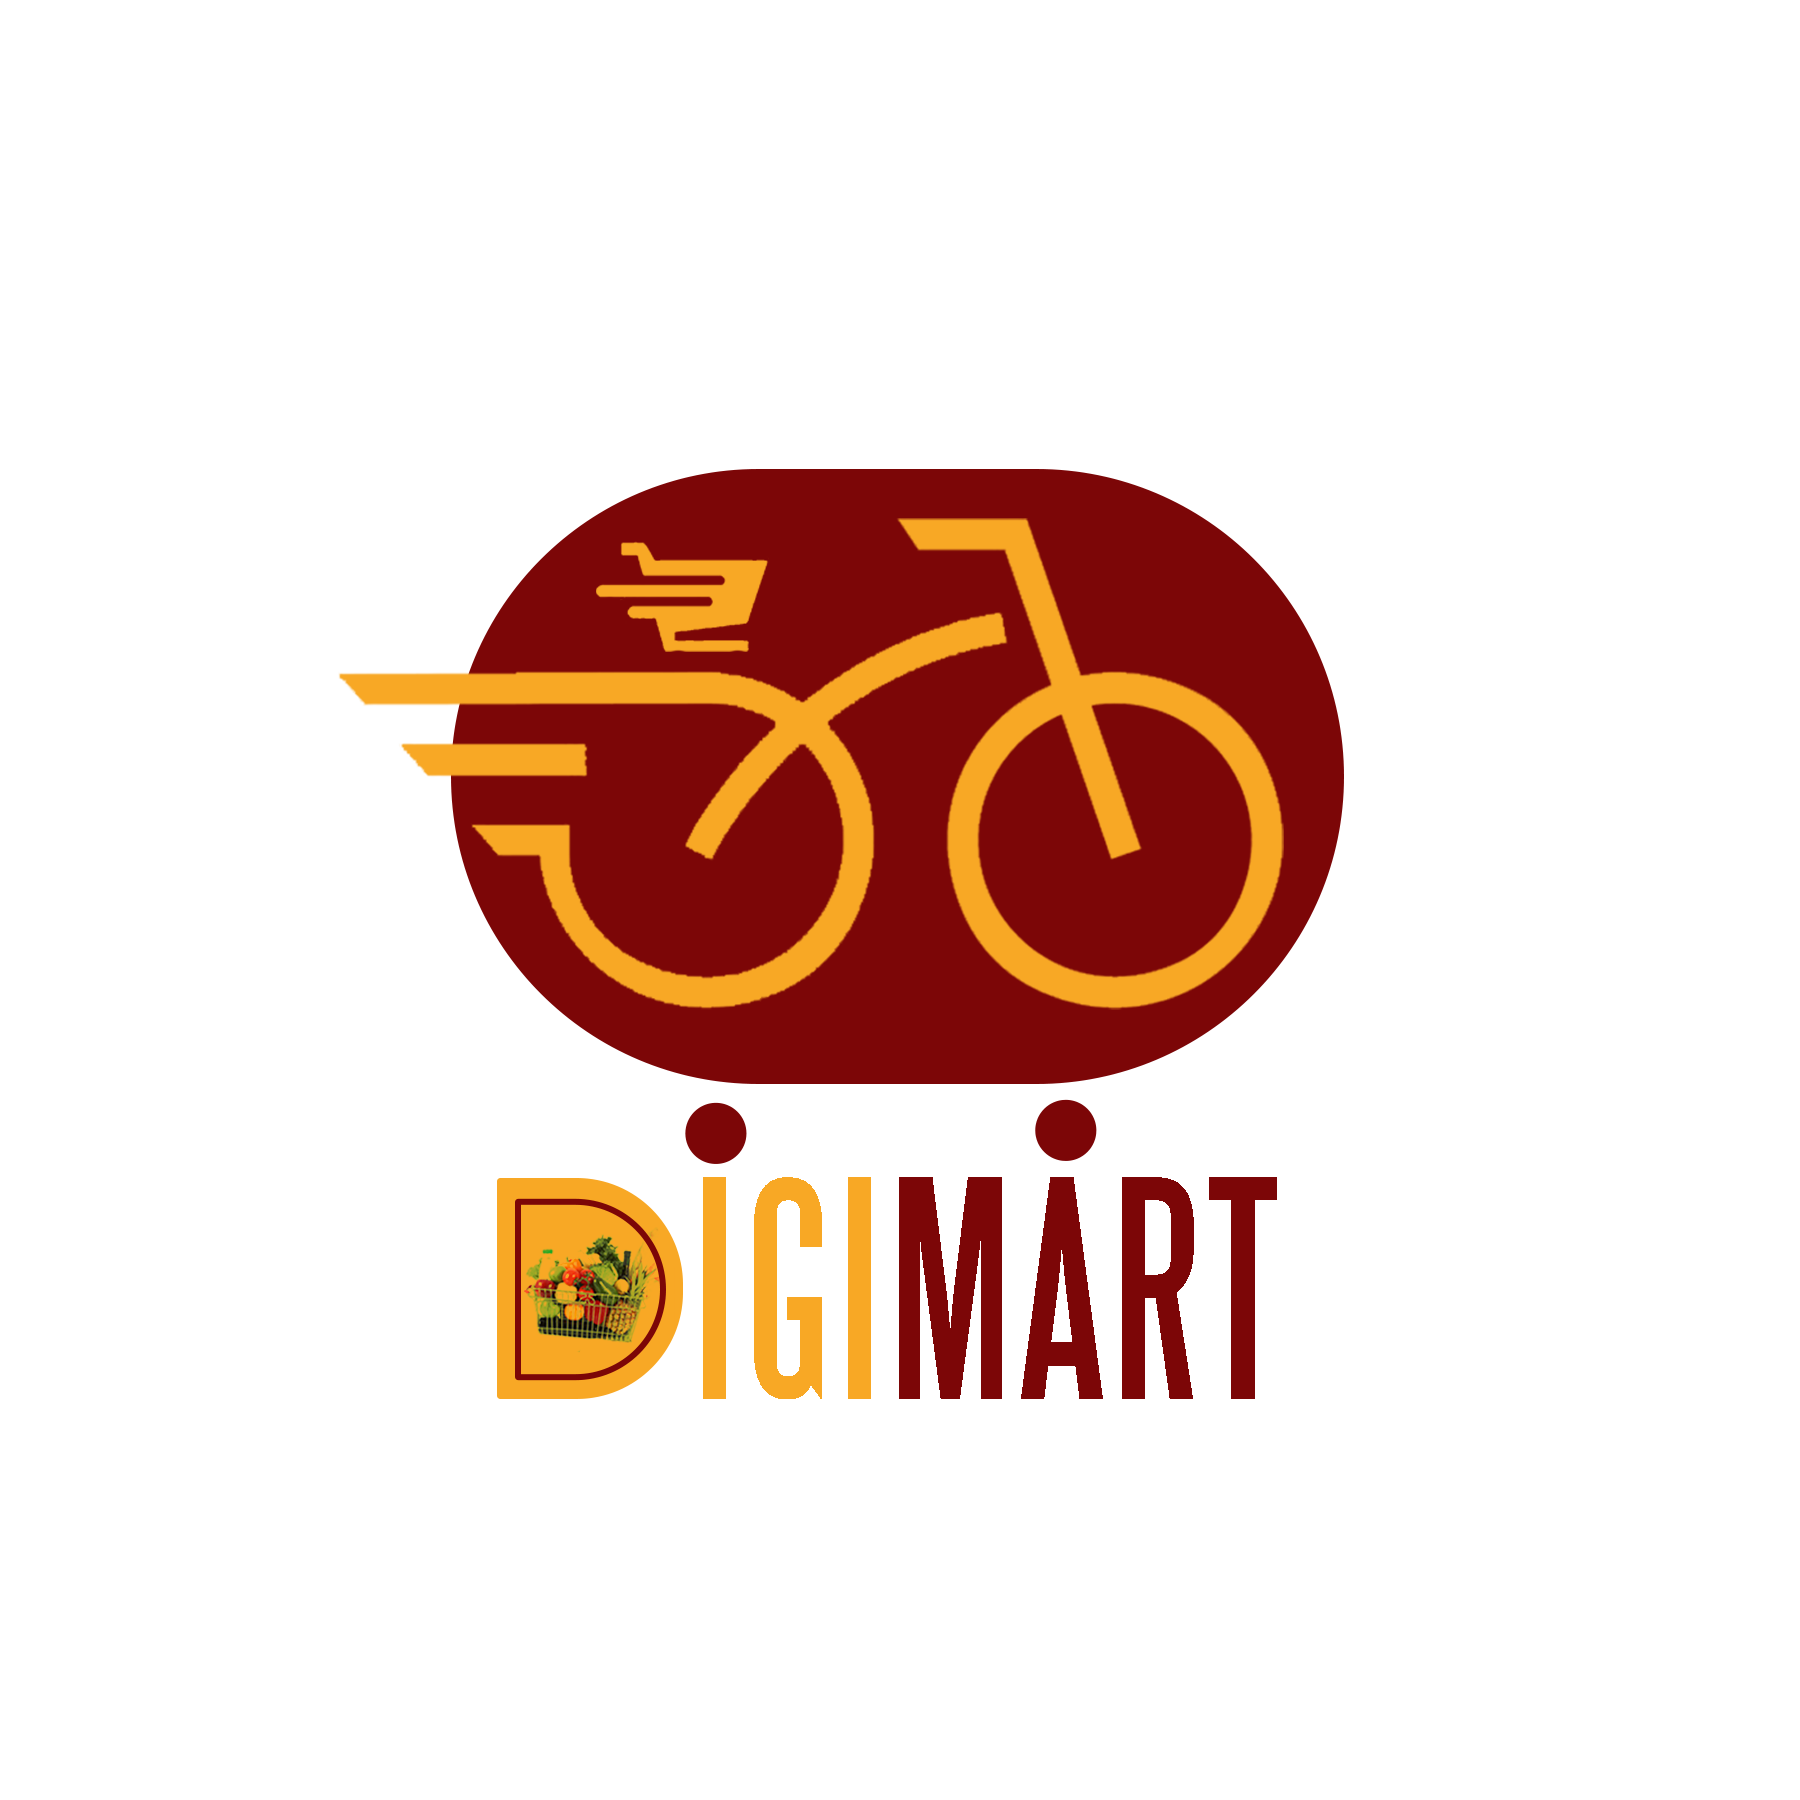 Appiagyei Osei’s Digimart Online Groceries: Revolutionizing Grocery Shopping in Ghana